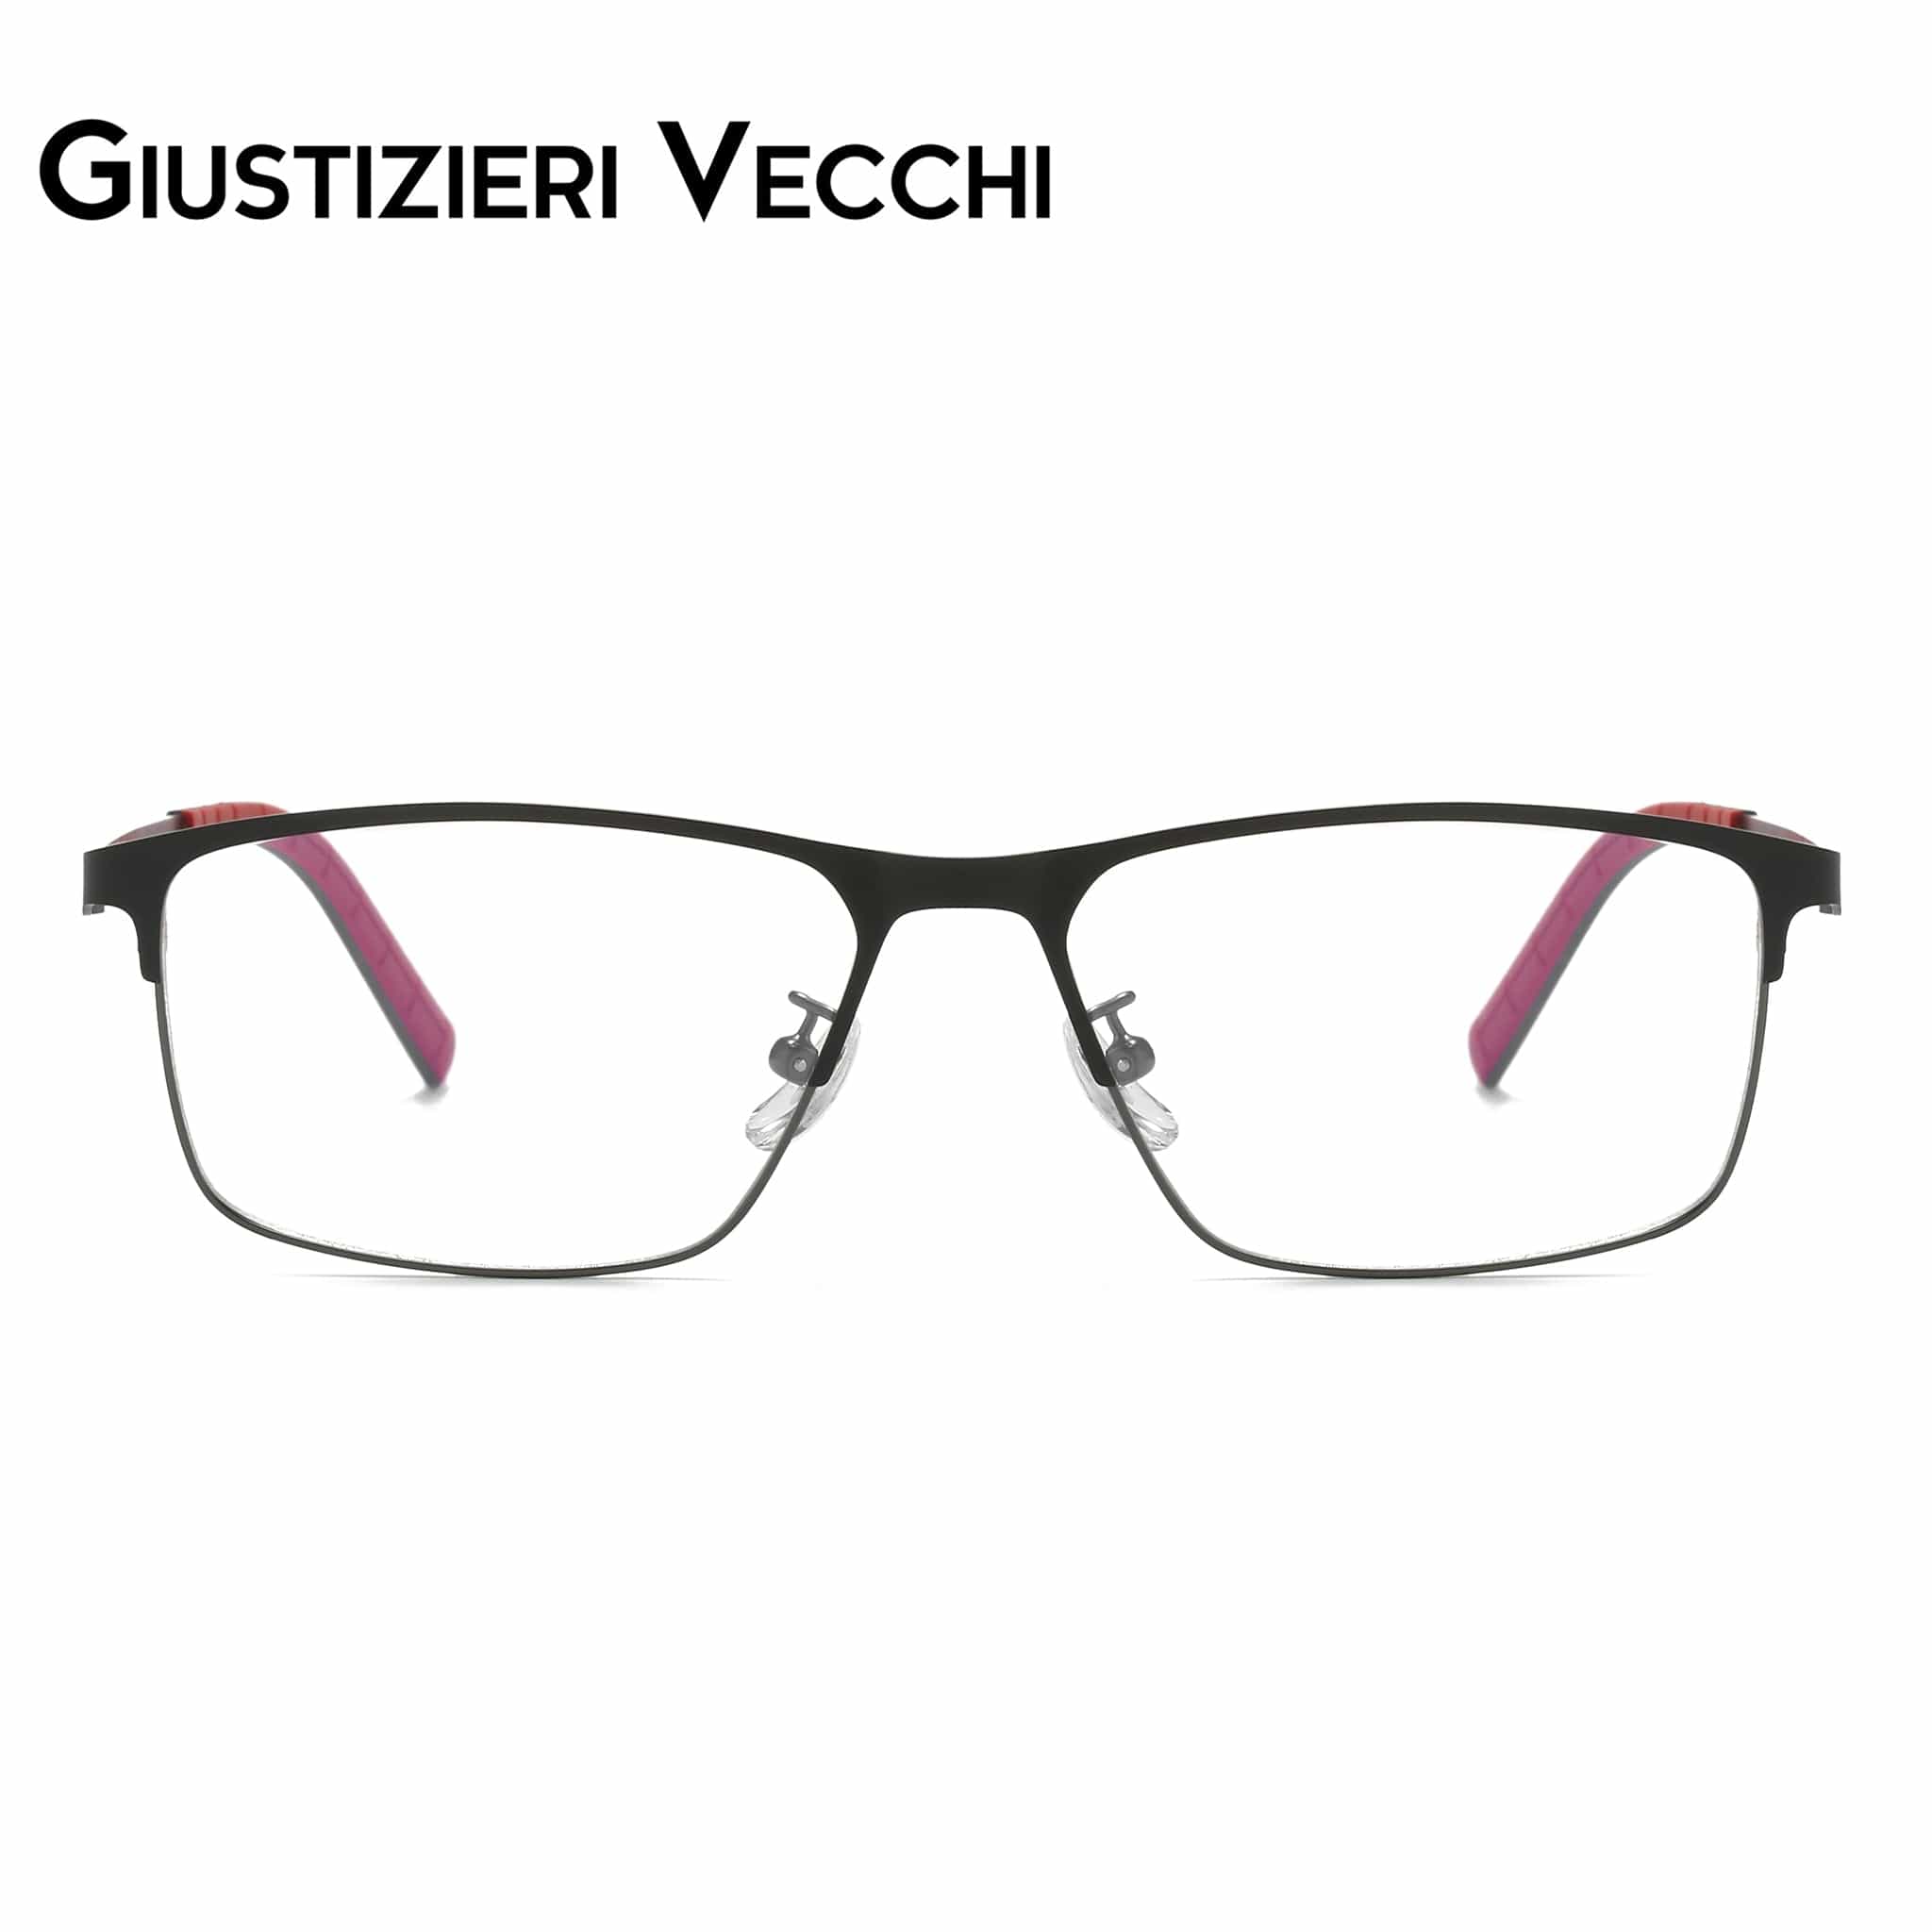 GIUSTIZIERI VECCHI Eyeglasses Large / Black with Red Sunburst Tre